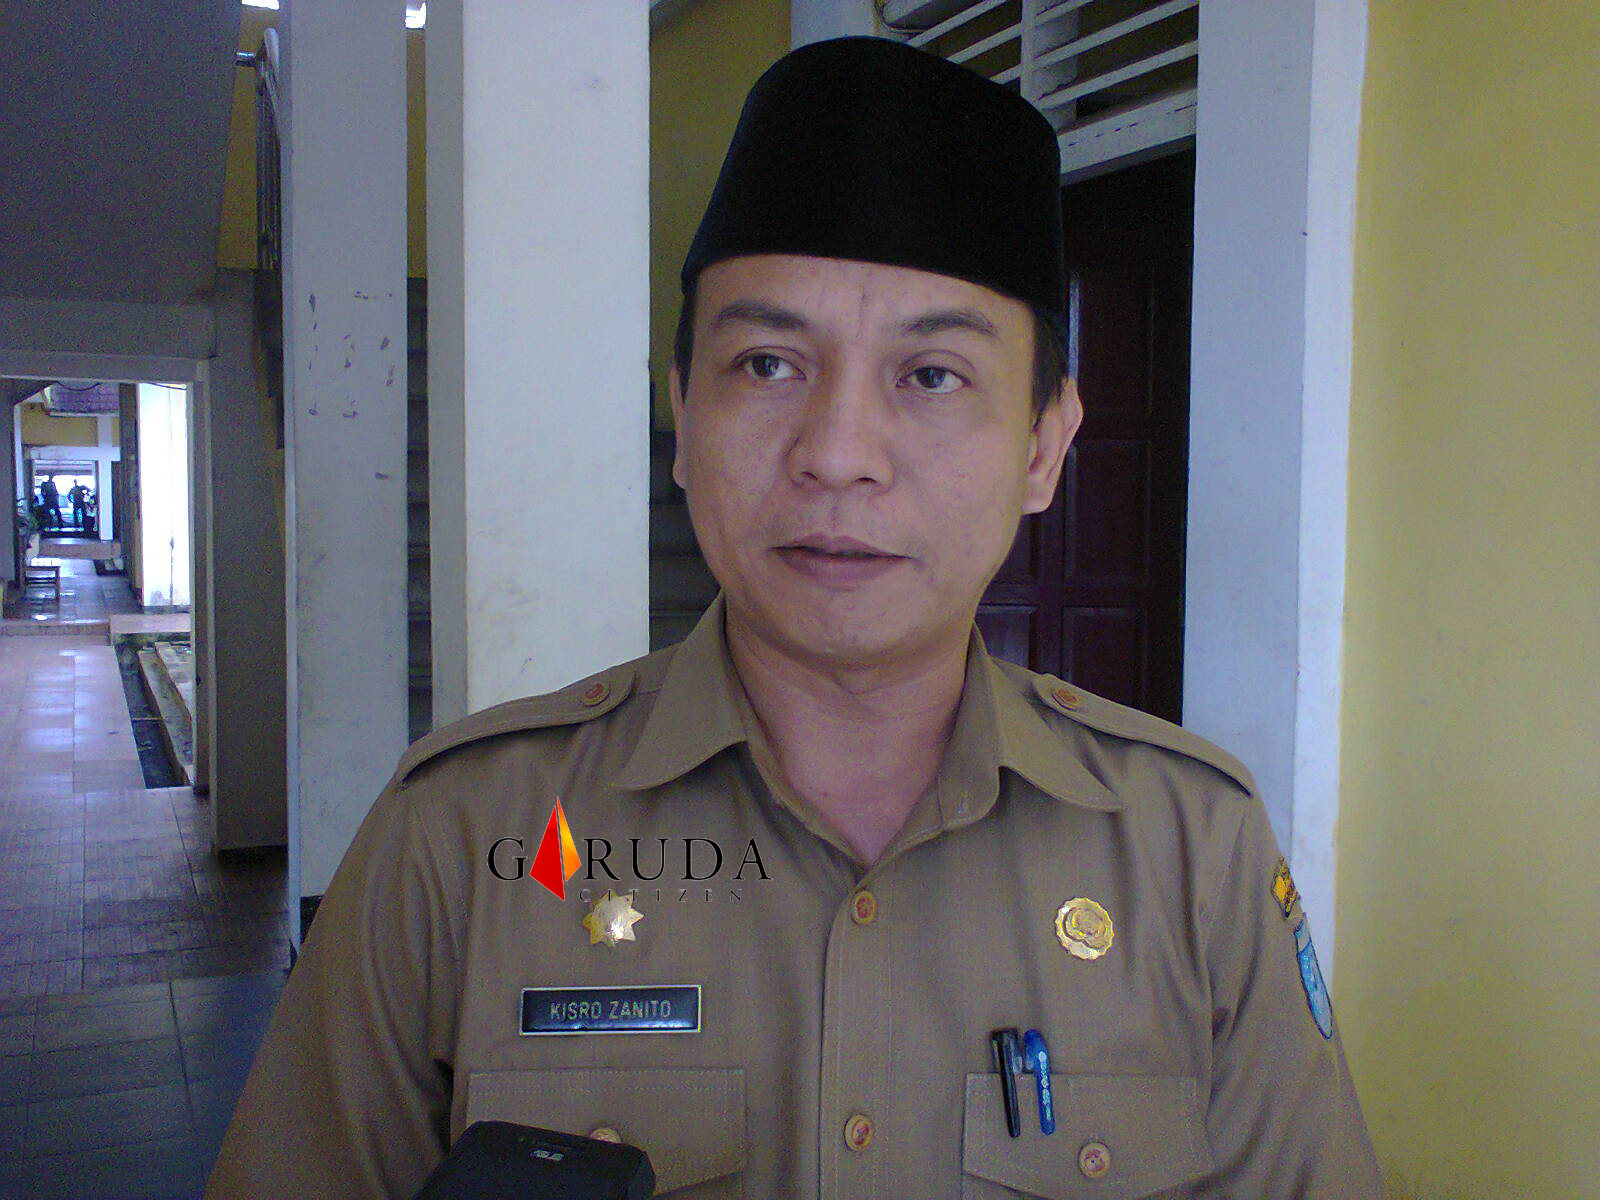 Kepala BPKAD Bengkulu Utara,Kisro Zanito